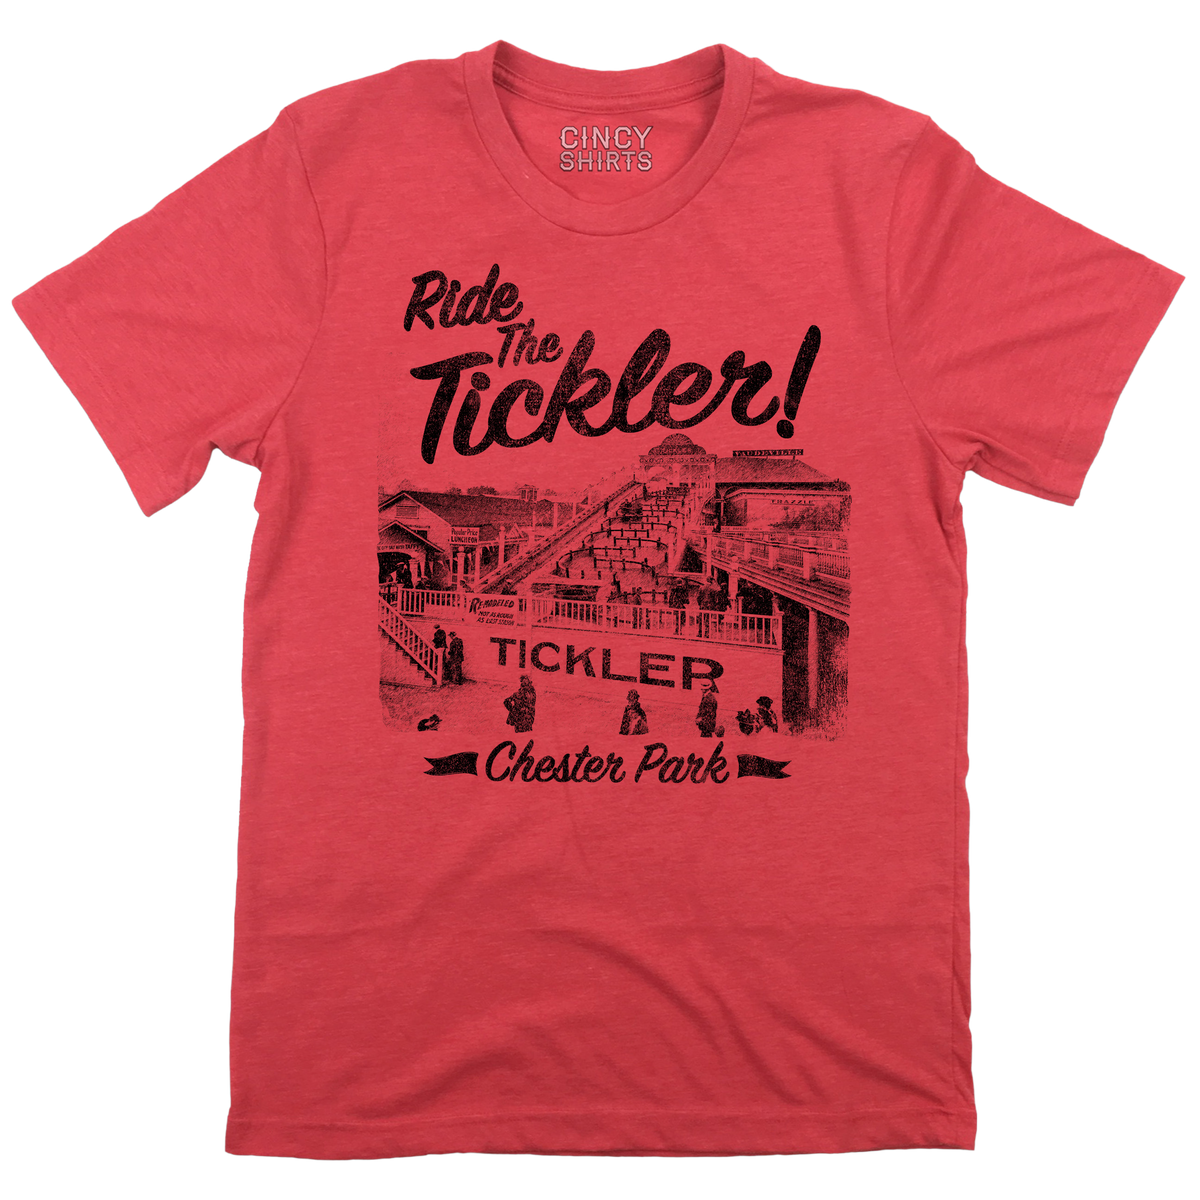 Ride The Tickler! Cincinnati Chester Park Old School Shirts